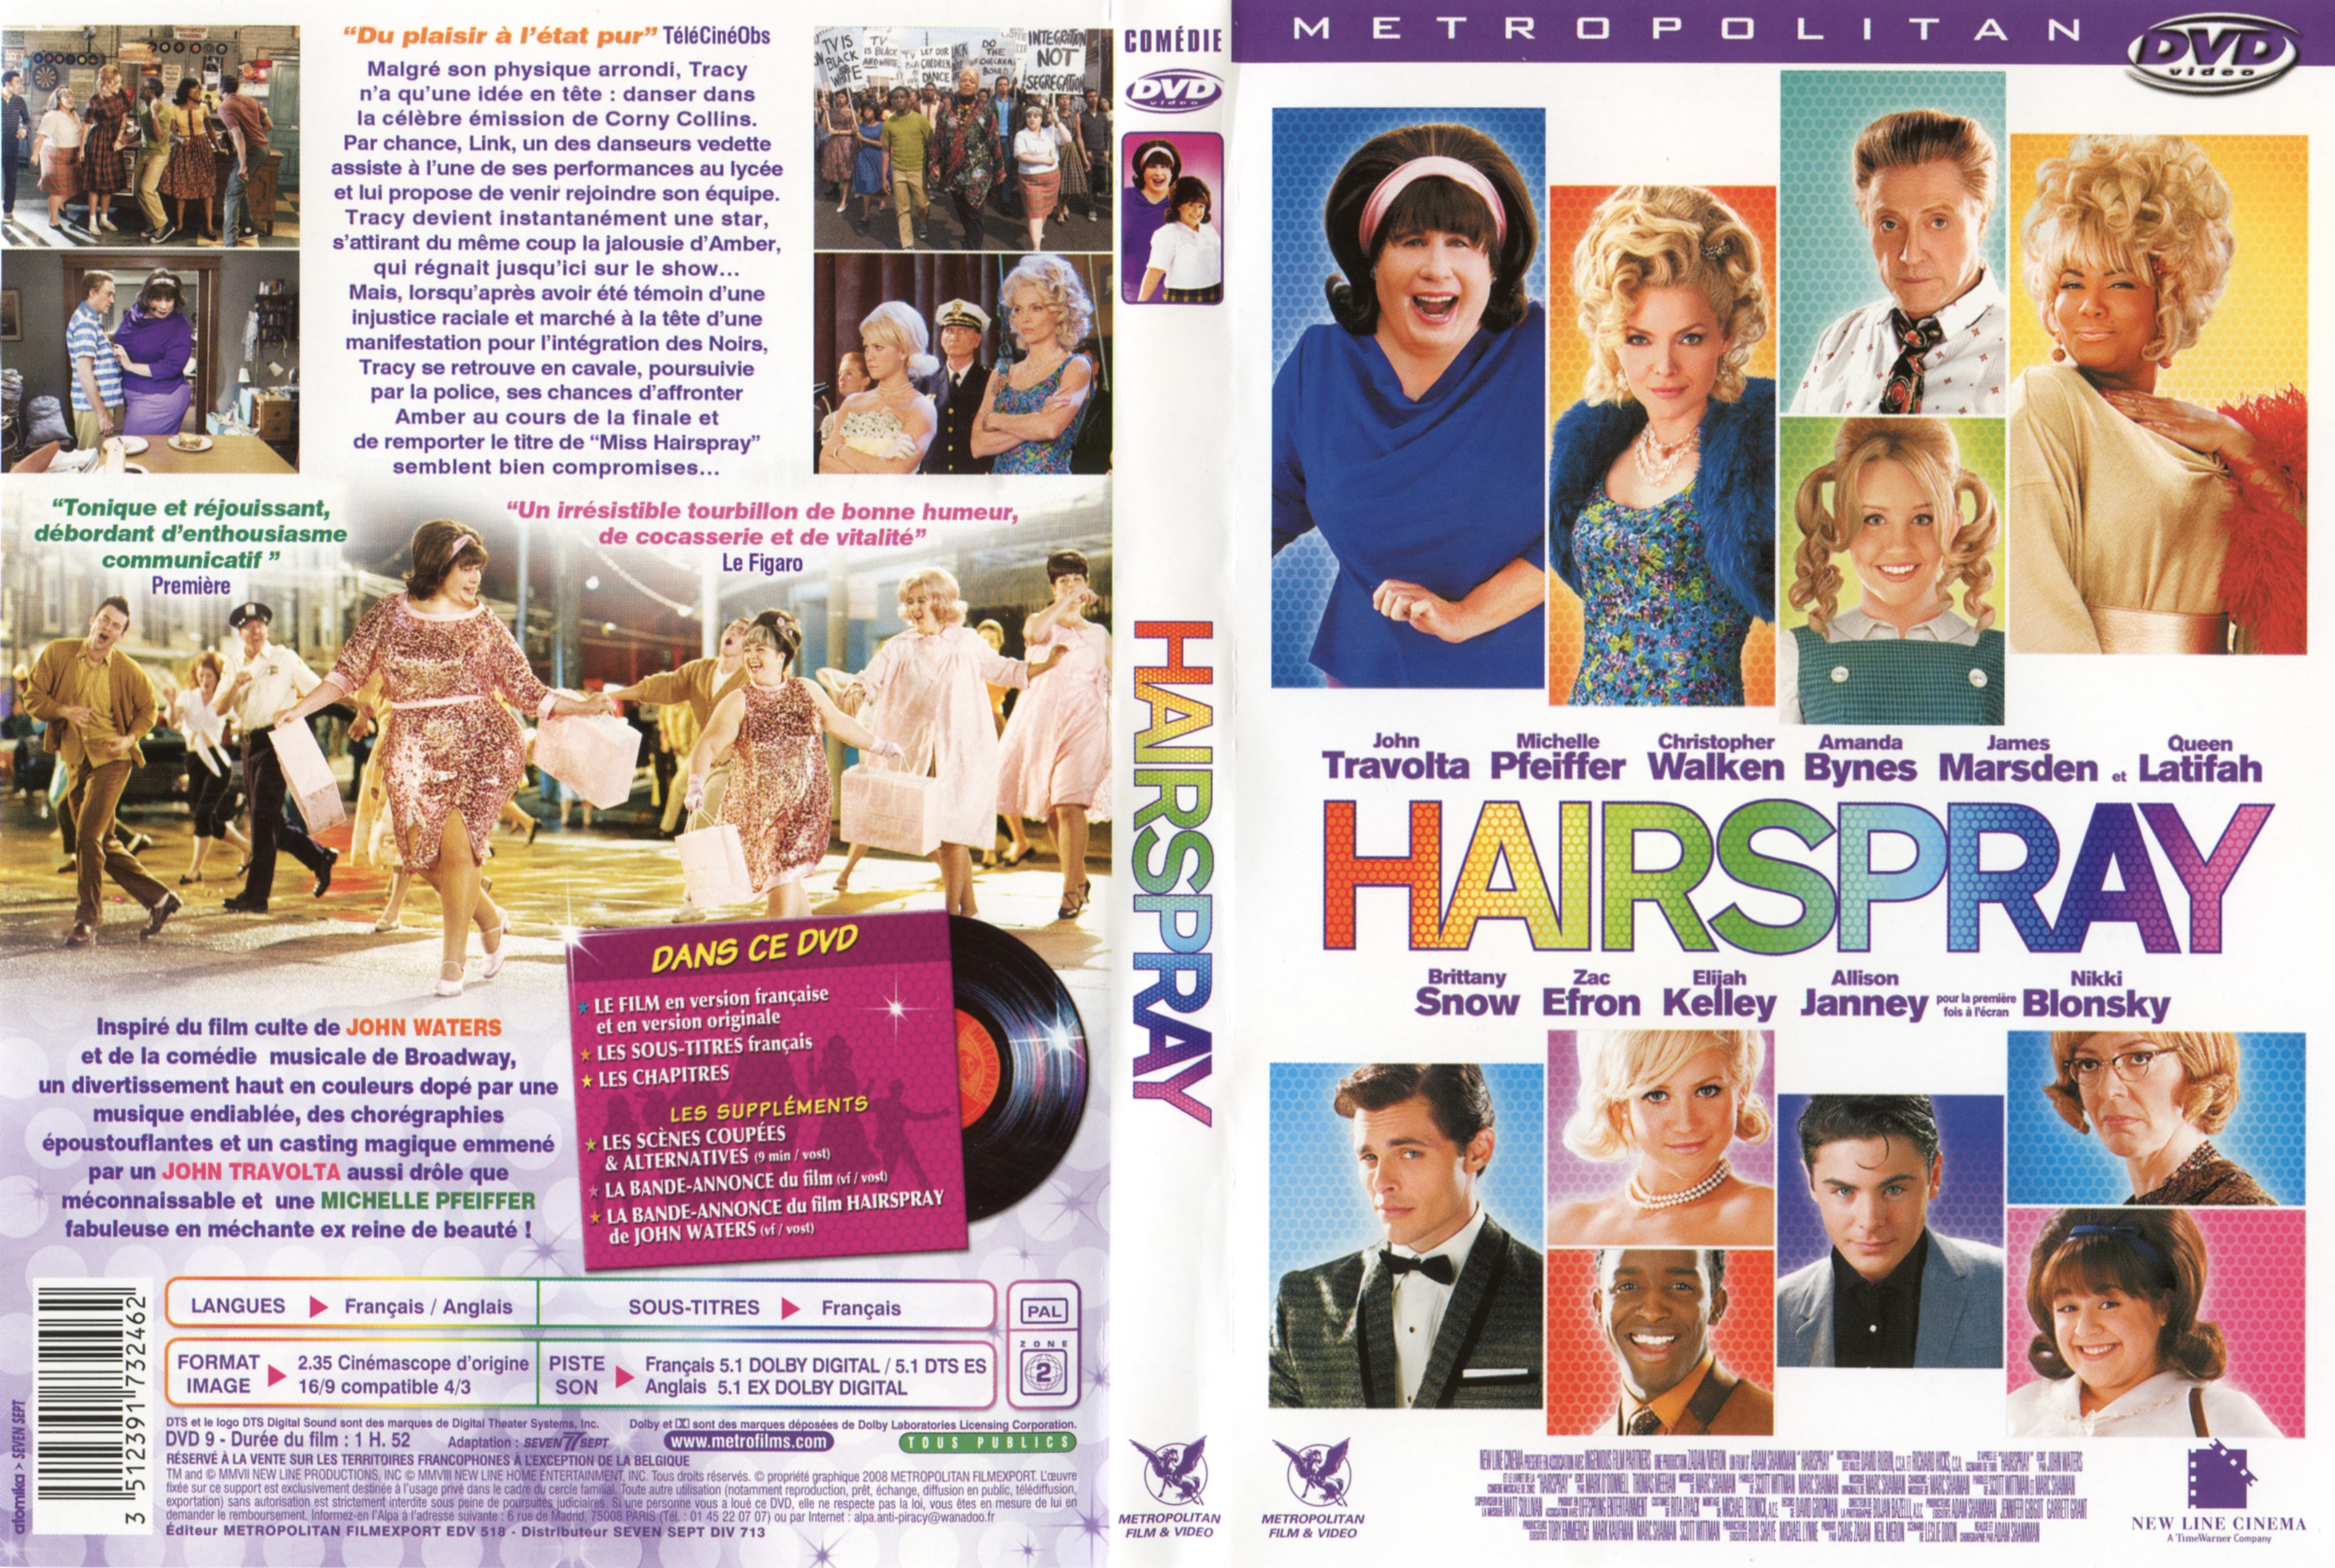 Jaquette DVD Hairspray v2